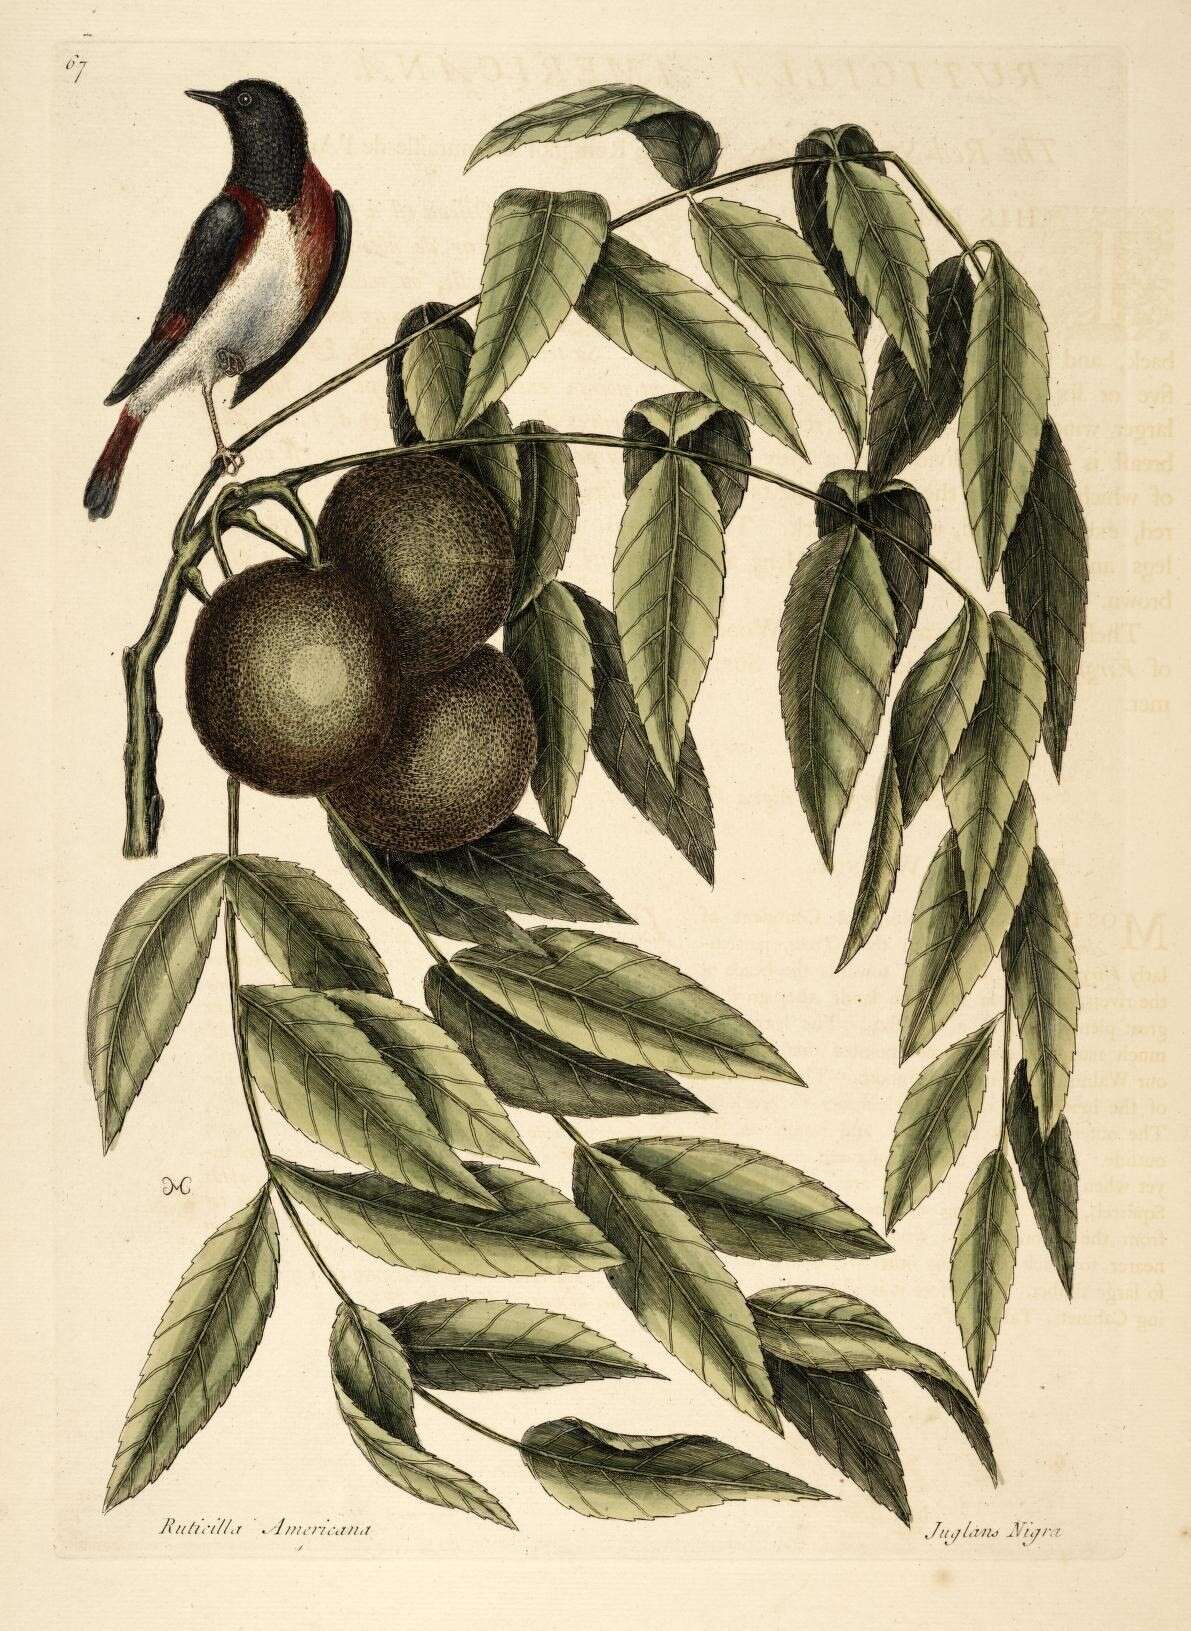 Image of black walnut